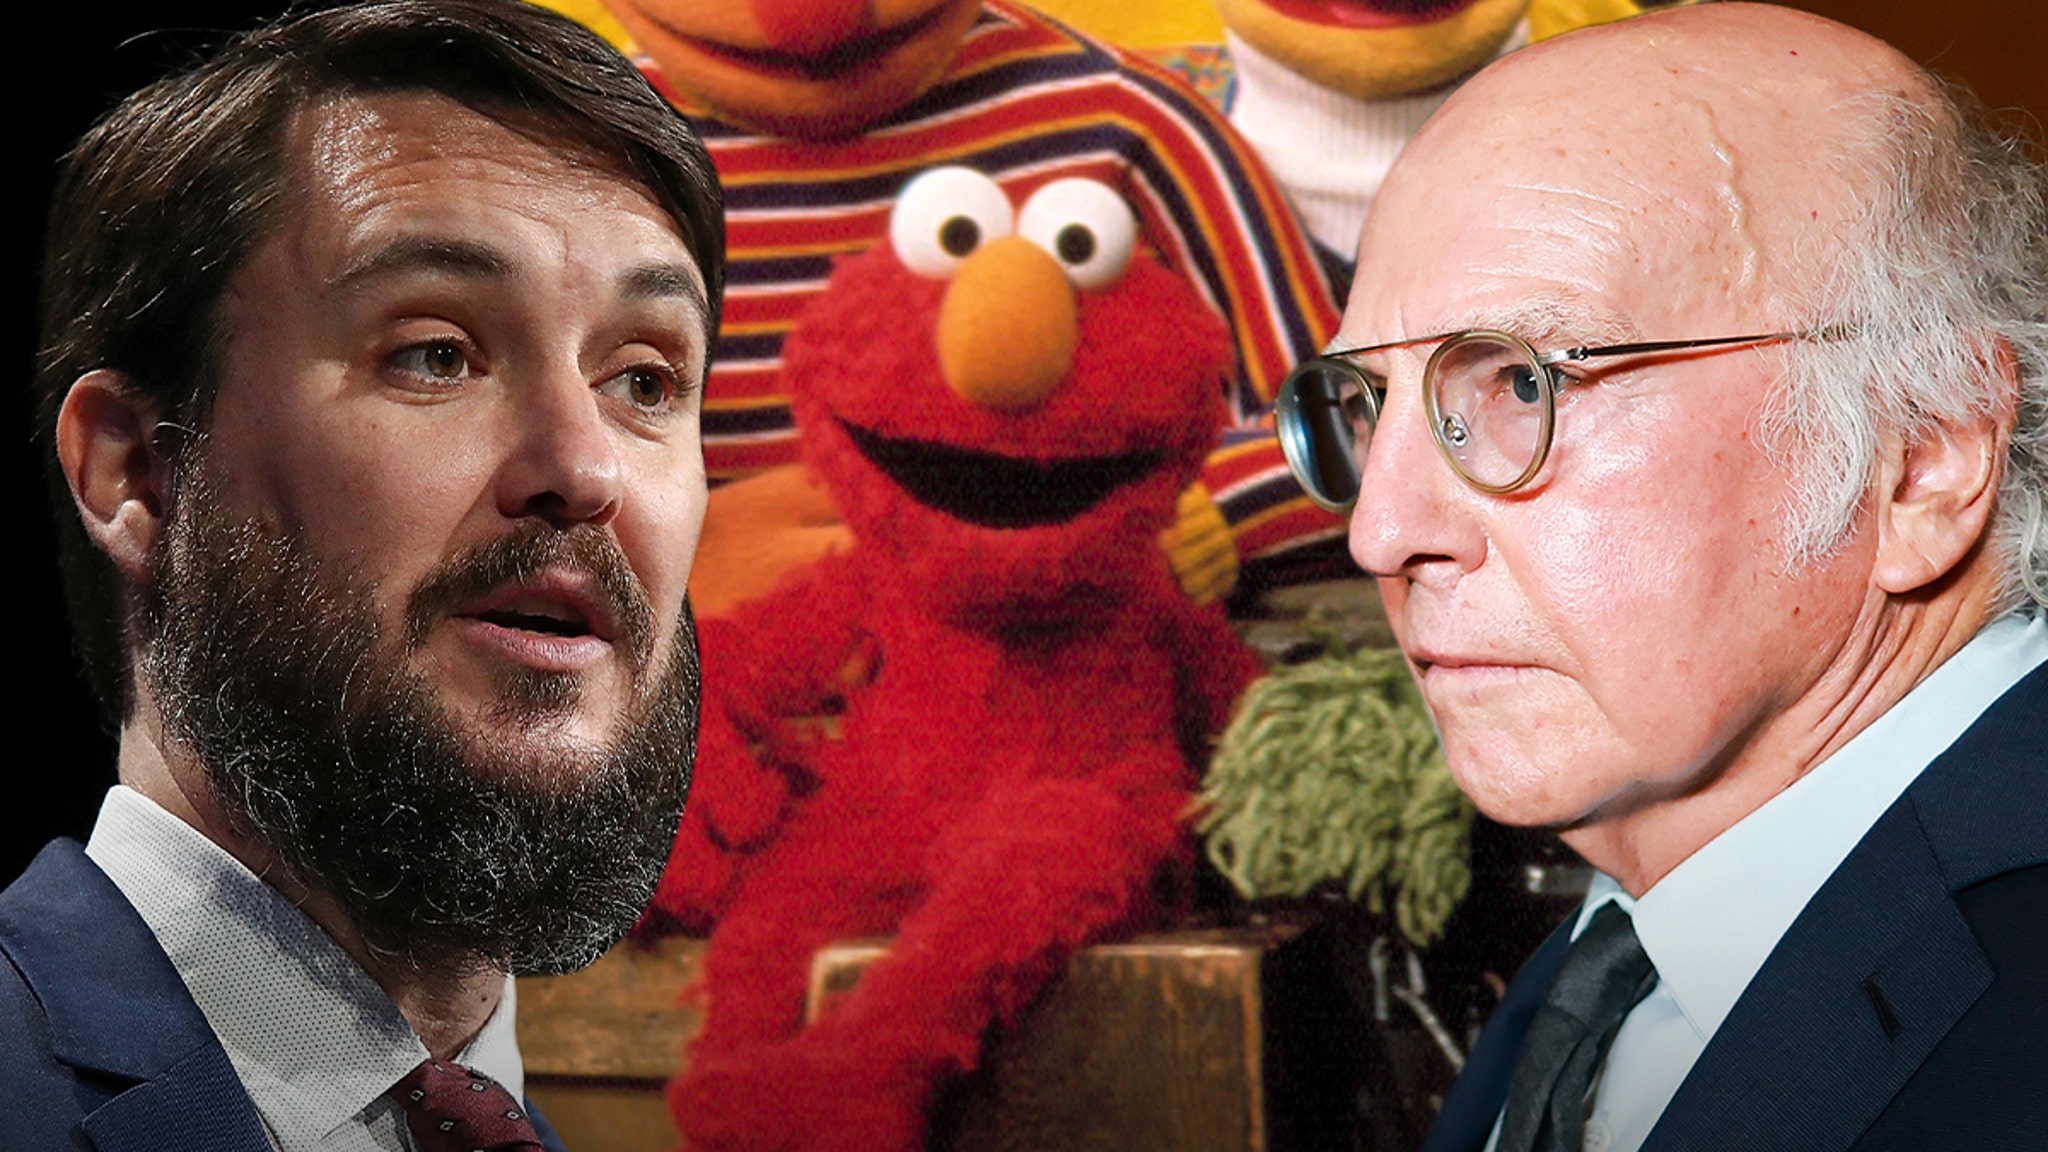 Wil Wheaton Says Larry David's Jokey Elmo 'Attack' Triggered Old Trauma